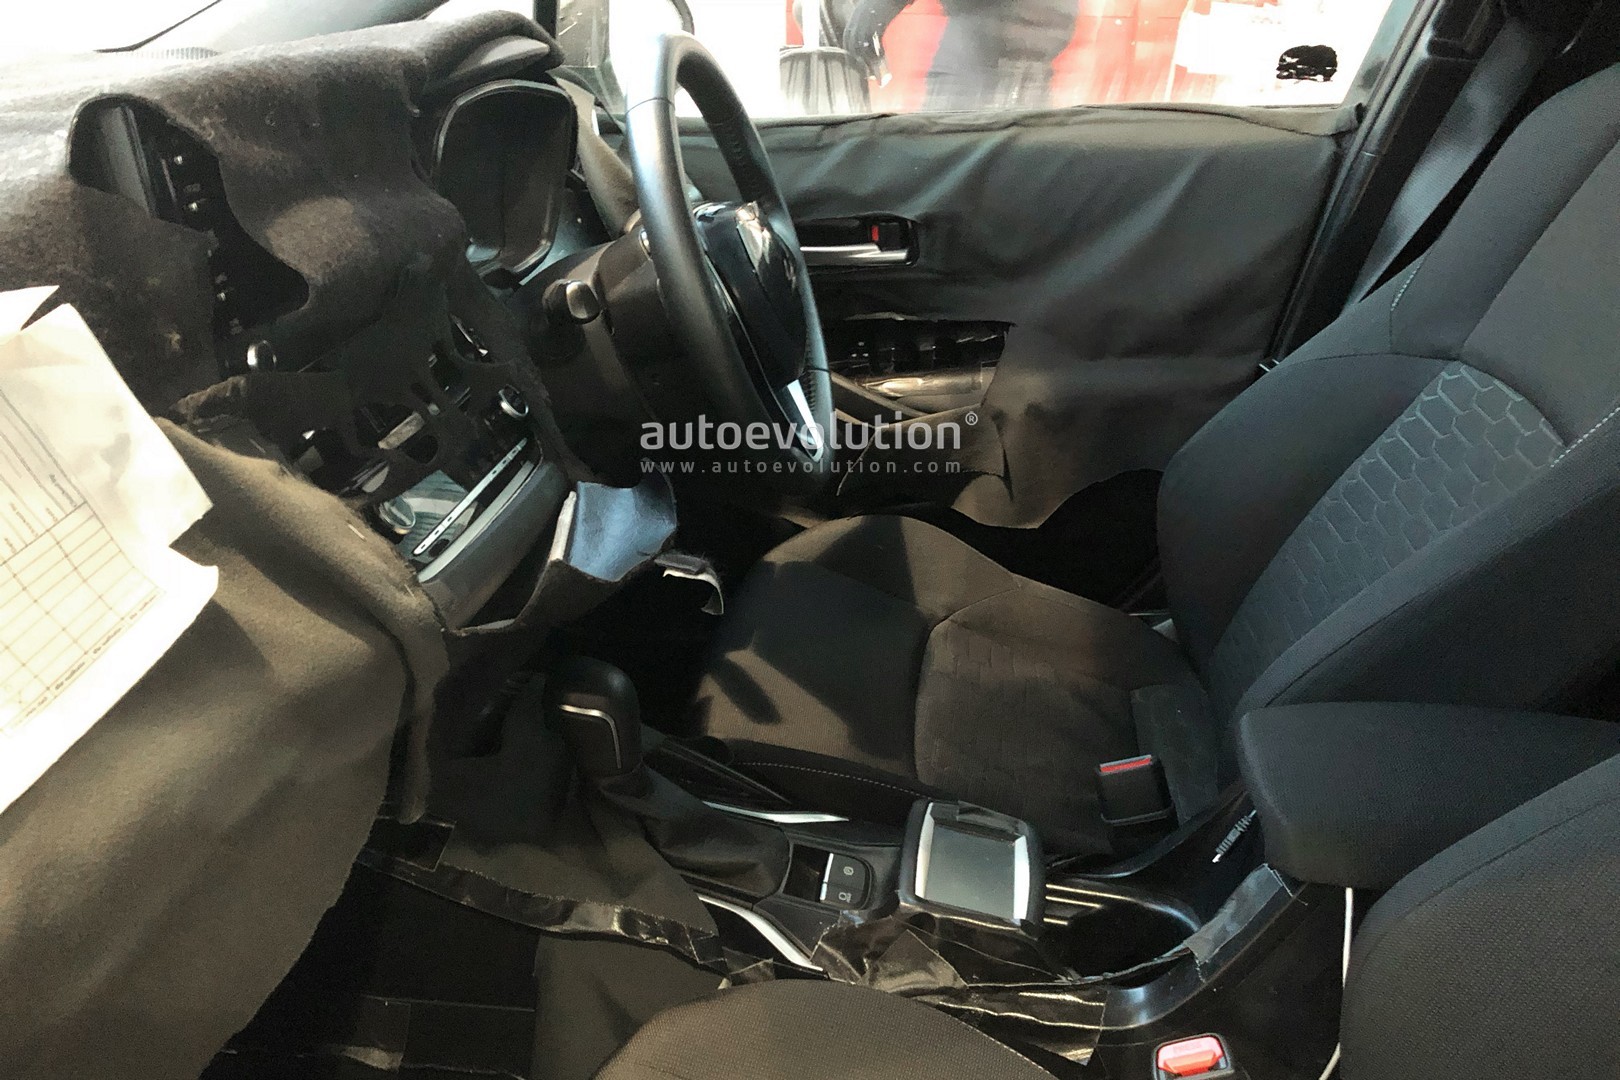 2019 Toyota Auris Reveals New Interior and Angular Design in